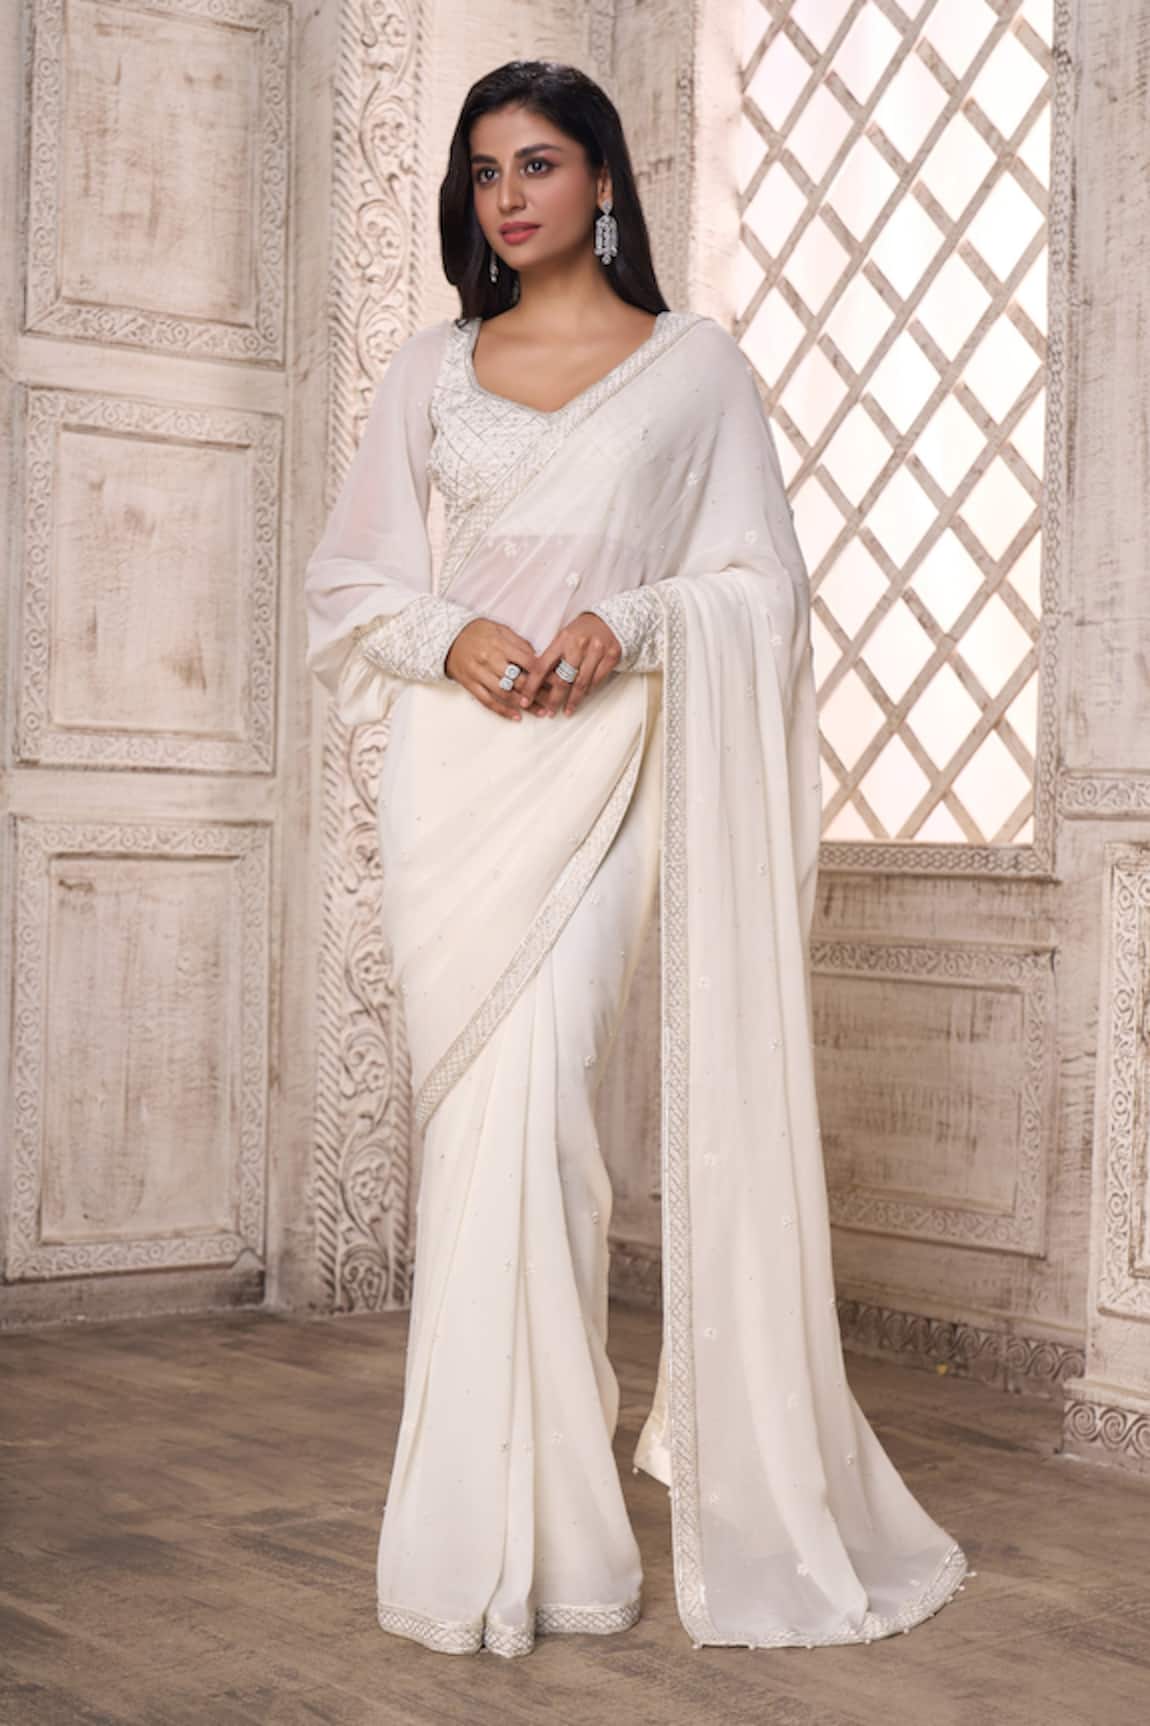 Buy White Saree Online For Women @ Best Price In India | YOYO Fashion